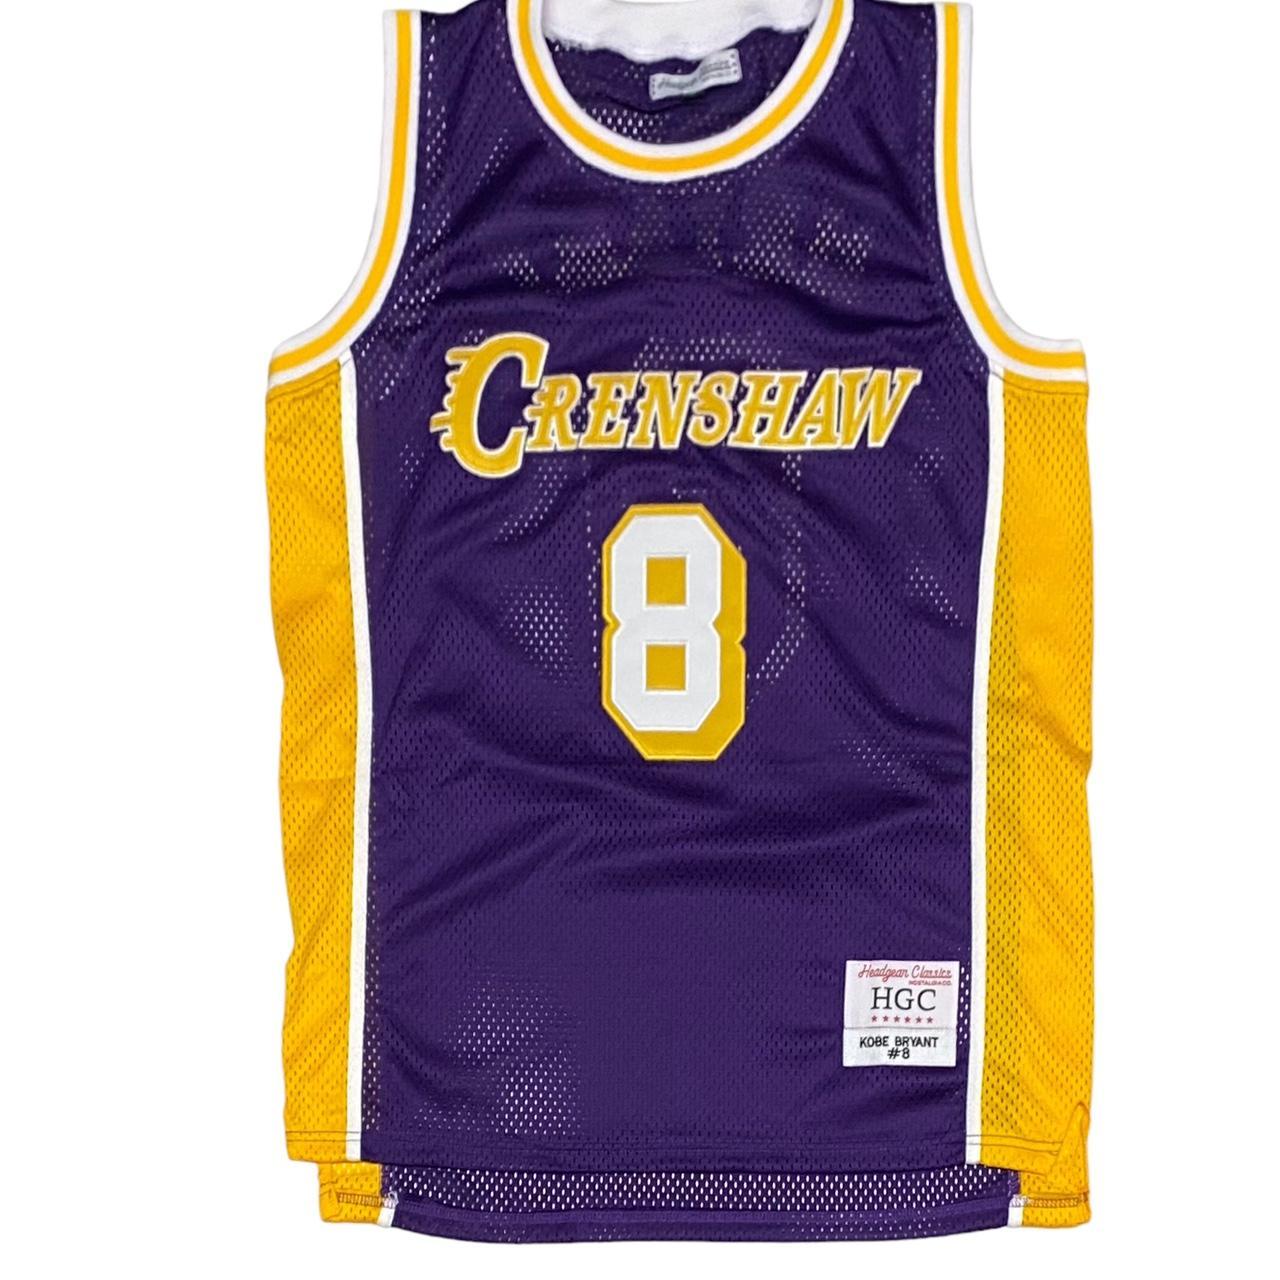 La lakers adidas swingman basketball jersey. Kobe - Depop